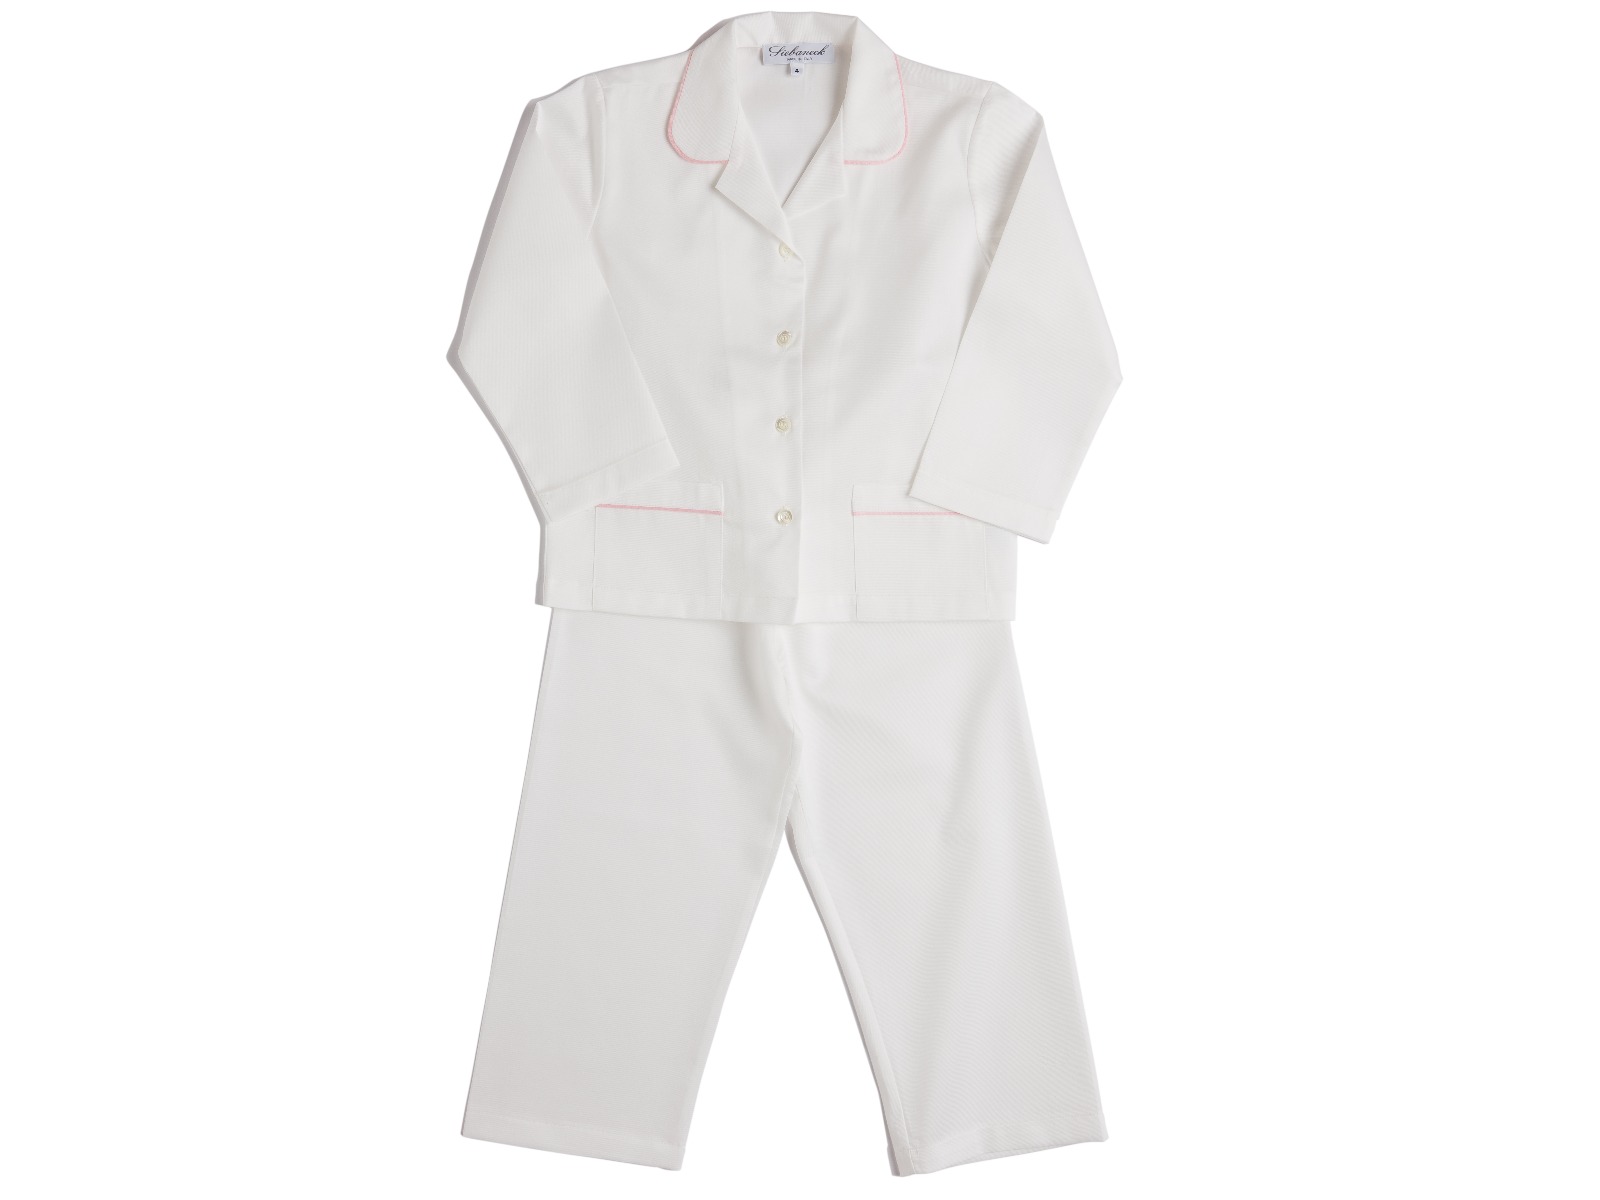 Siebaneck, i pigiami artigianali italiani: - bambino- mod.1 bis bianco profilo rosa 